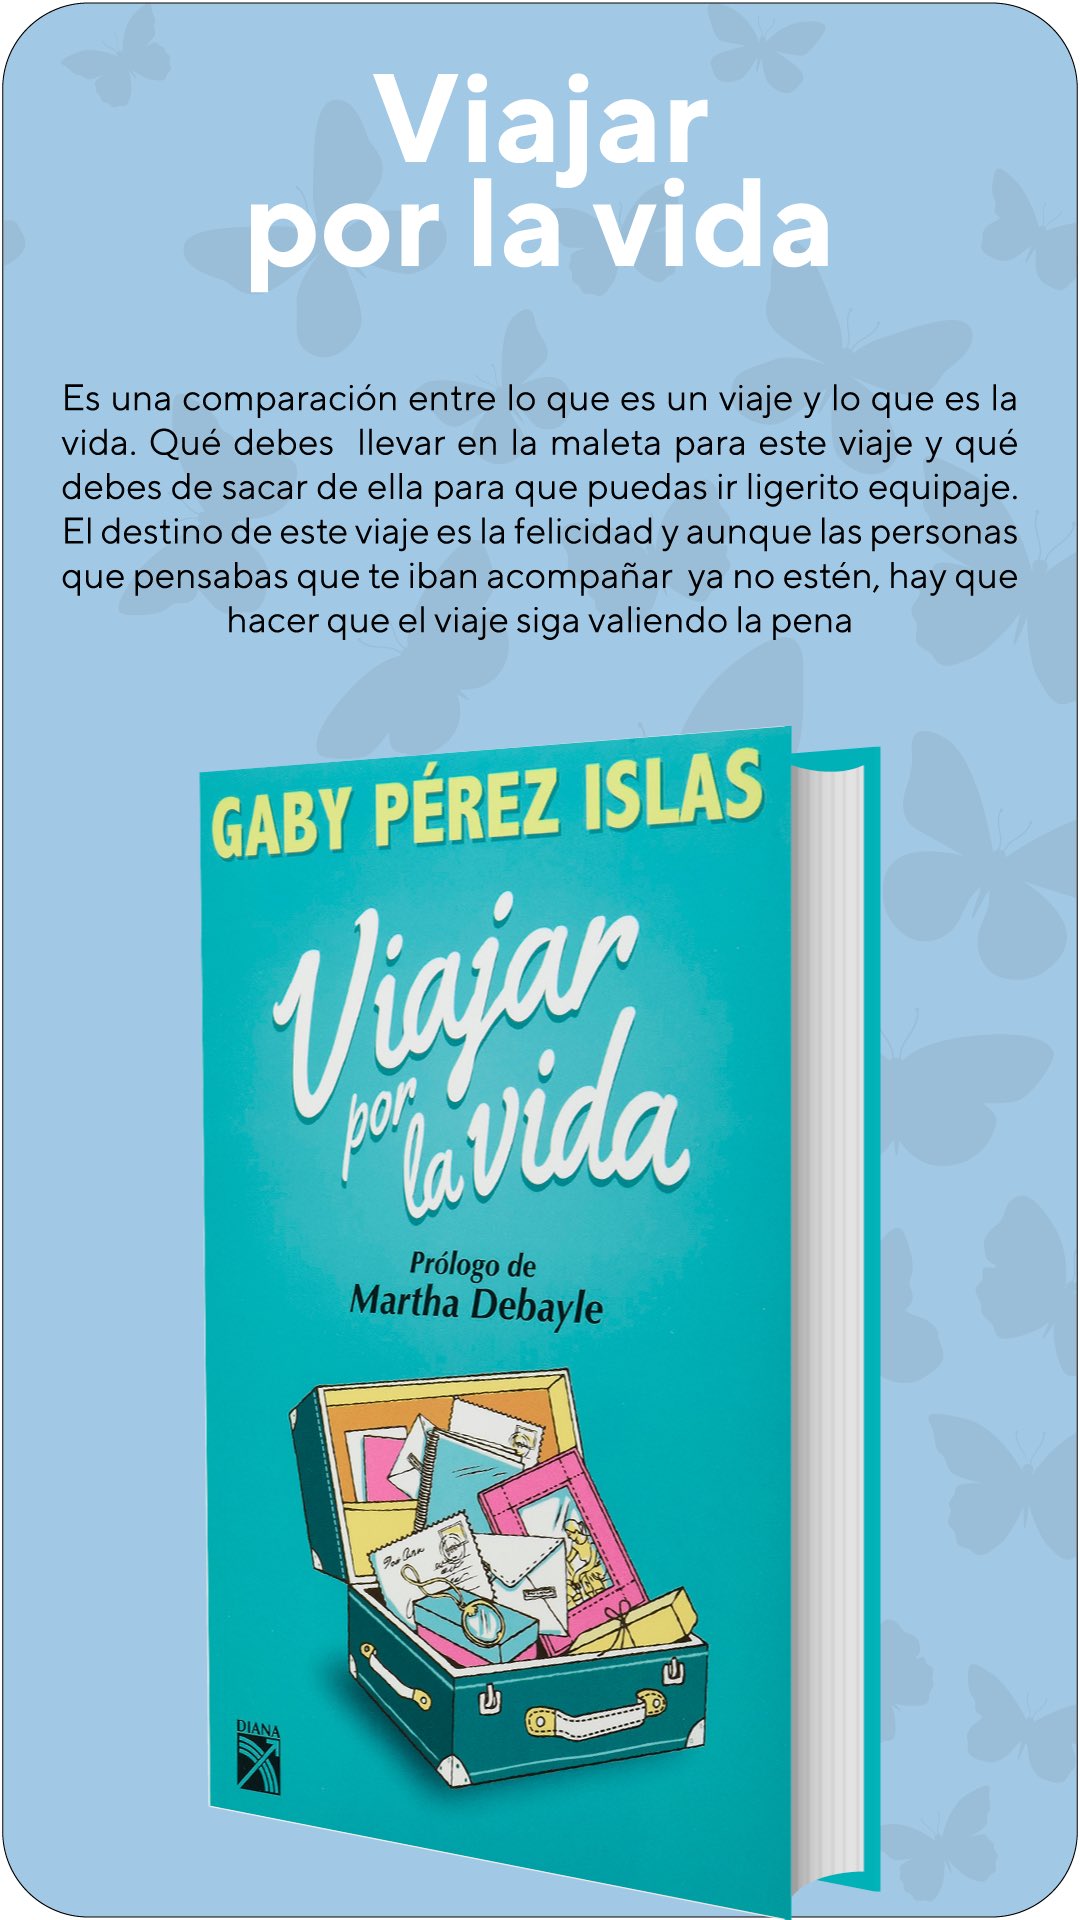 Marketing de motores de búsqueda amortiguar Cumplir Gaby Pérez Islas on Twitter: "¿Listos para este viaje? @PlanetaLibrosMx  https://t.co/zE3ysPywps" / Twitter